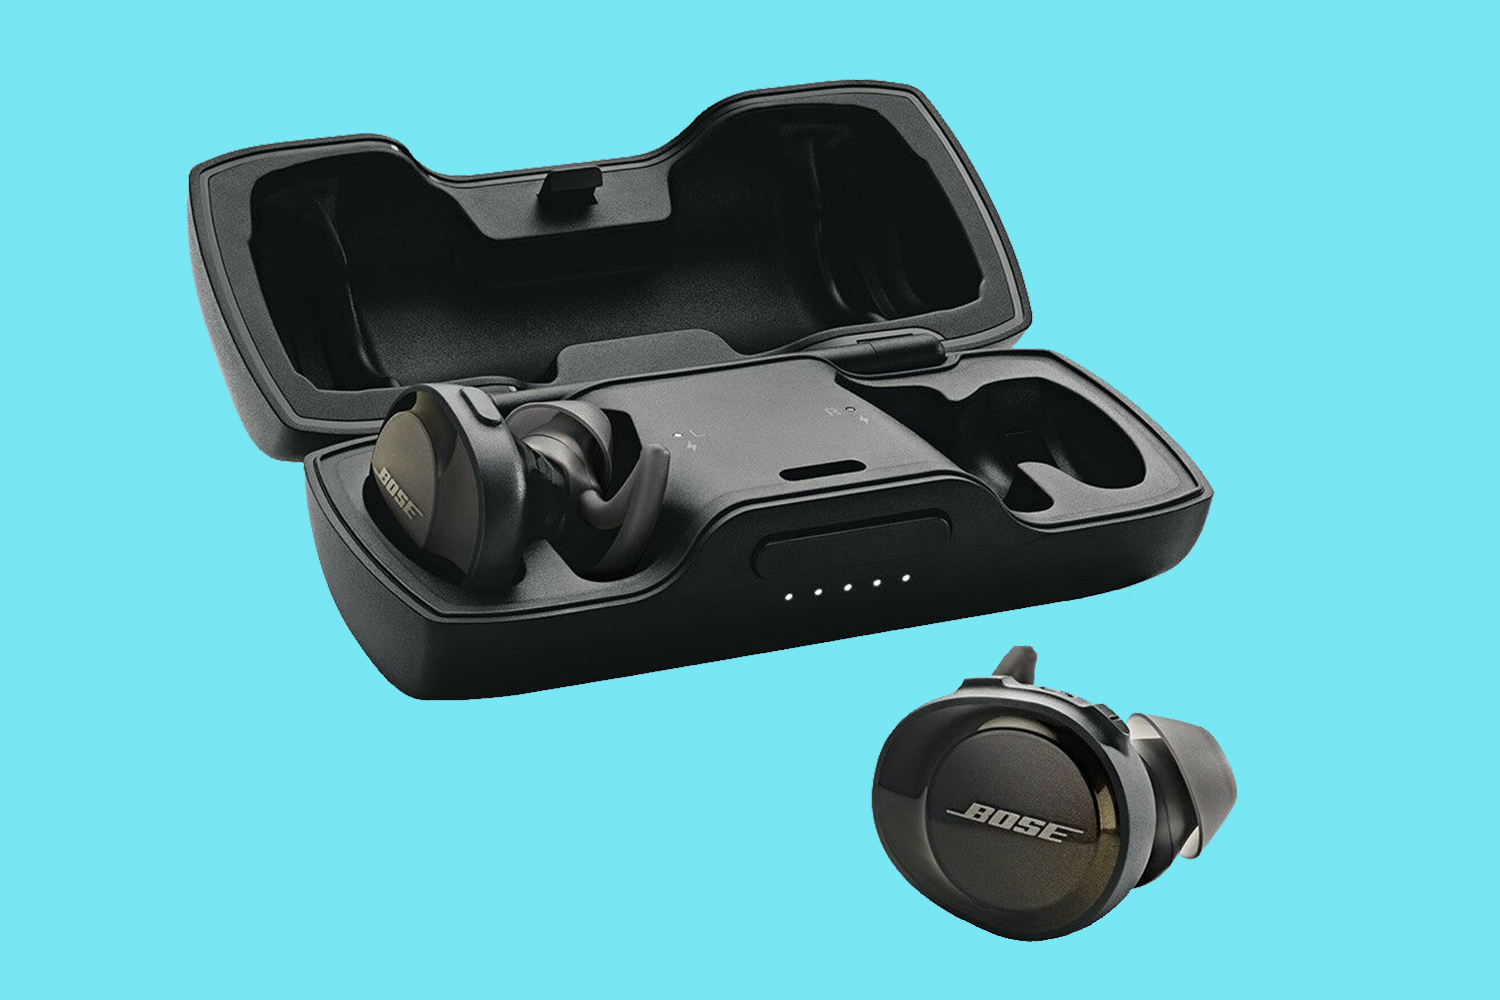 Bose SoundSport Free Wireless Headphones